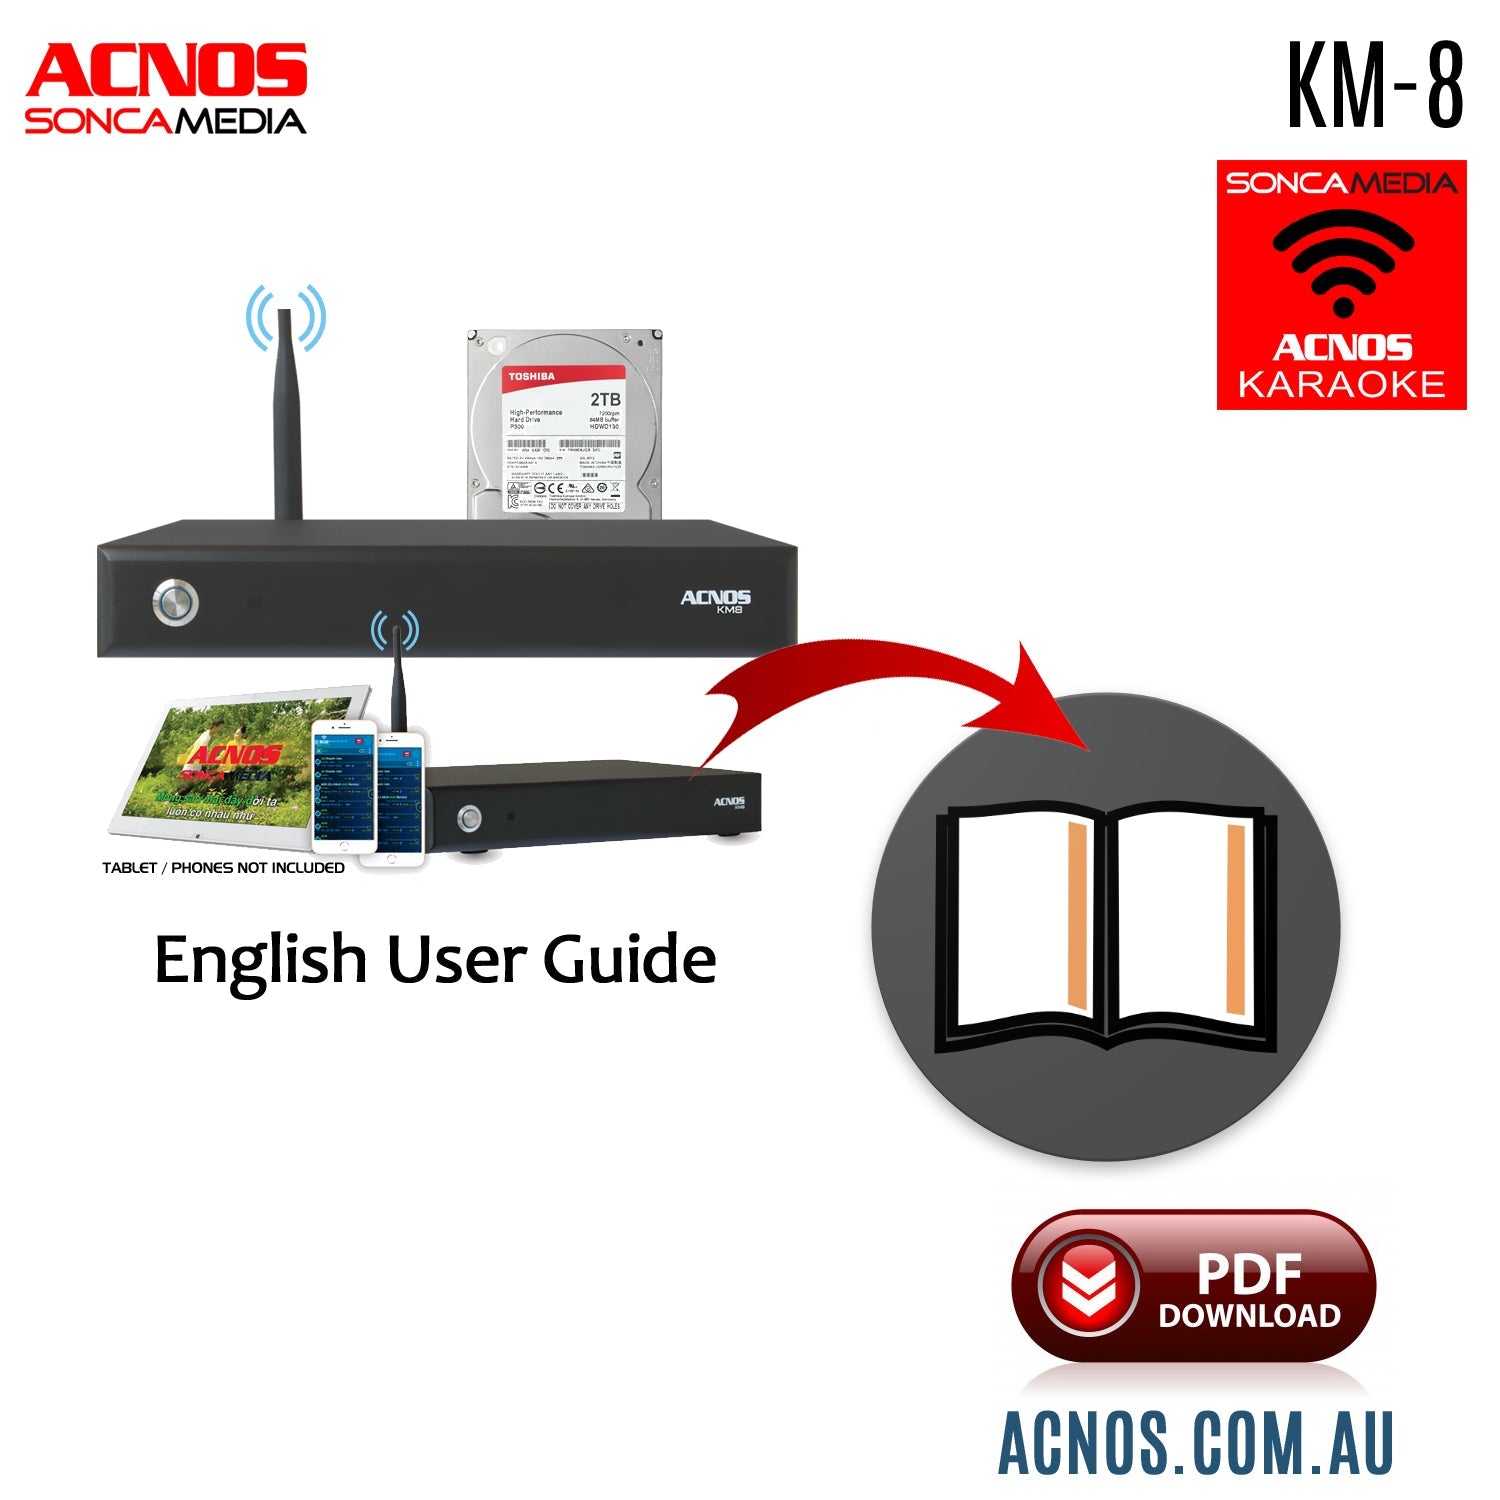 How To Connect Guide - ACNOS KM-8 Vietnamese Karaoke Hard Drive System - Karaoke Home Entertainment